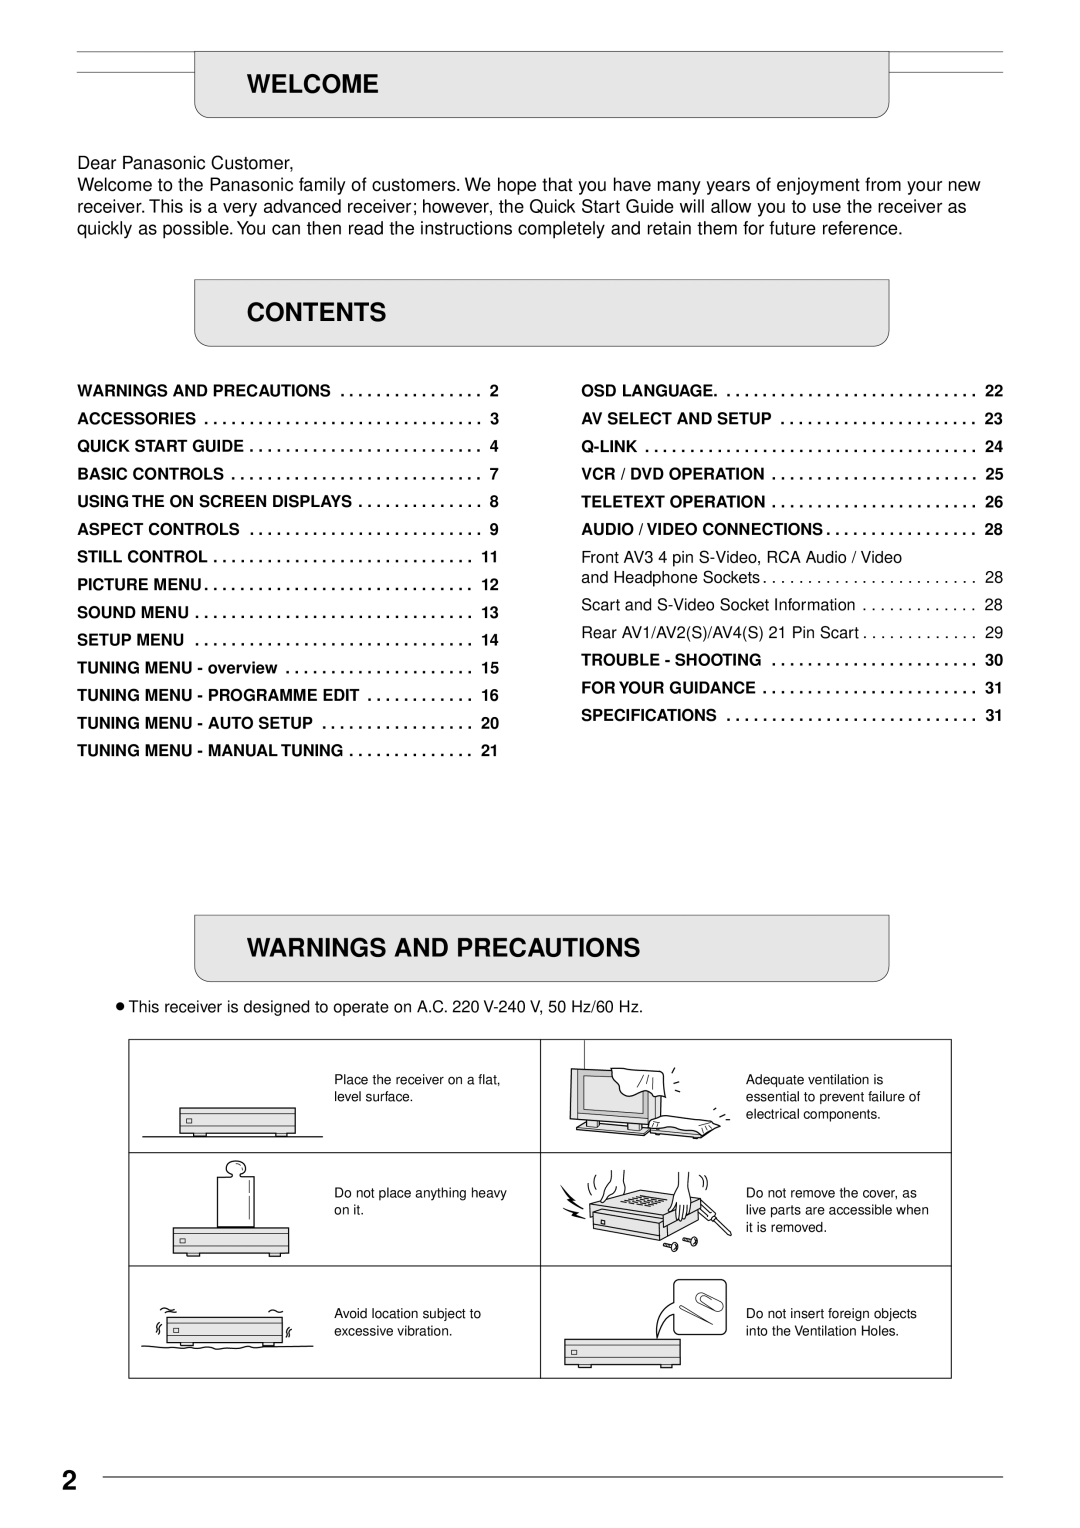 Panasonic TU-PTA100E manual Welcome, Contents, Warnings And Precautions, Dear Panasonic Customer 